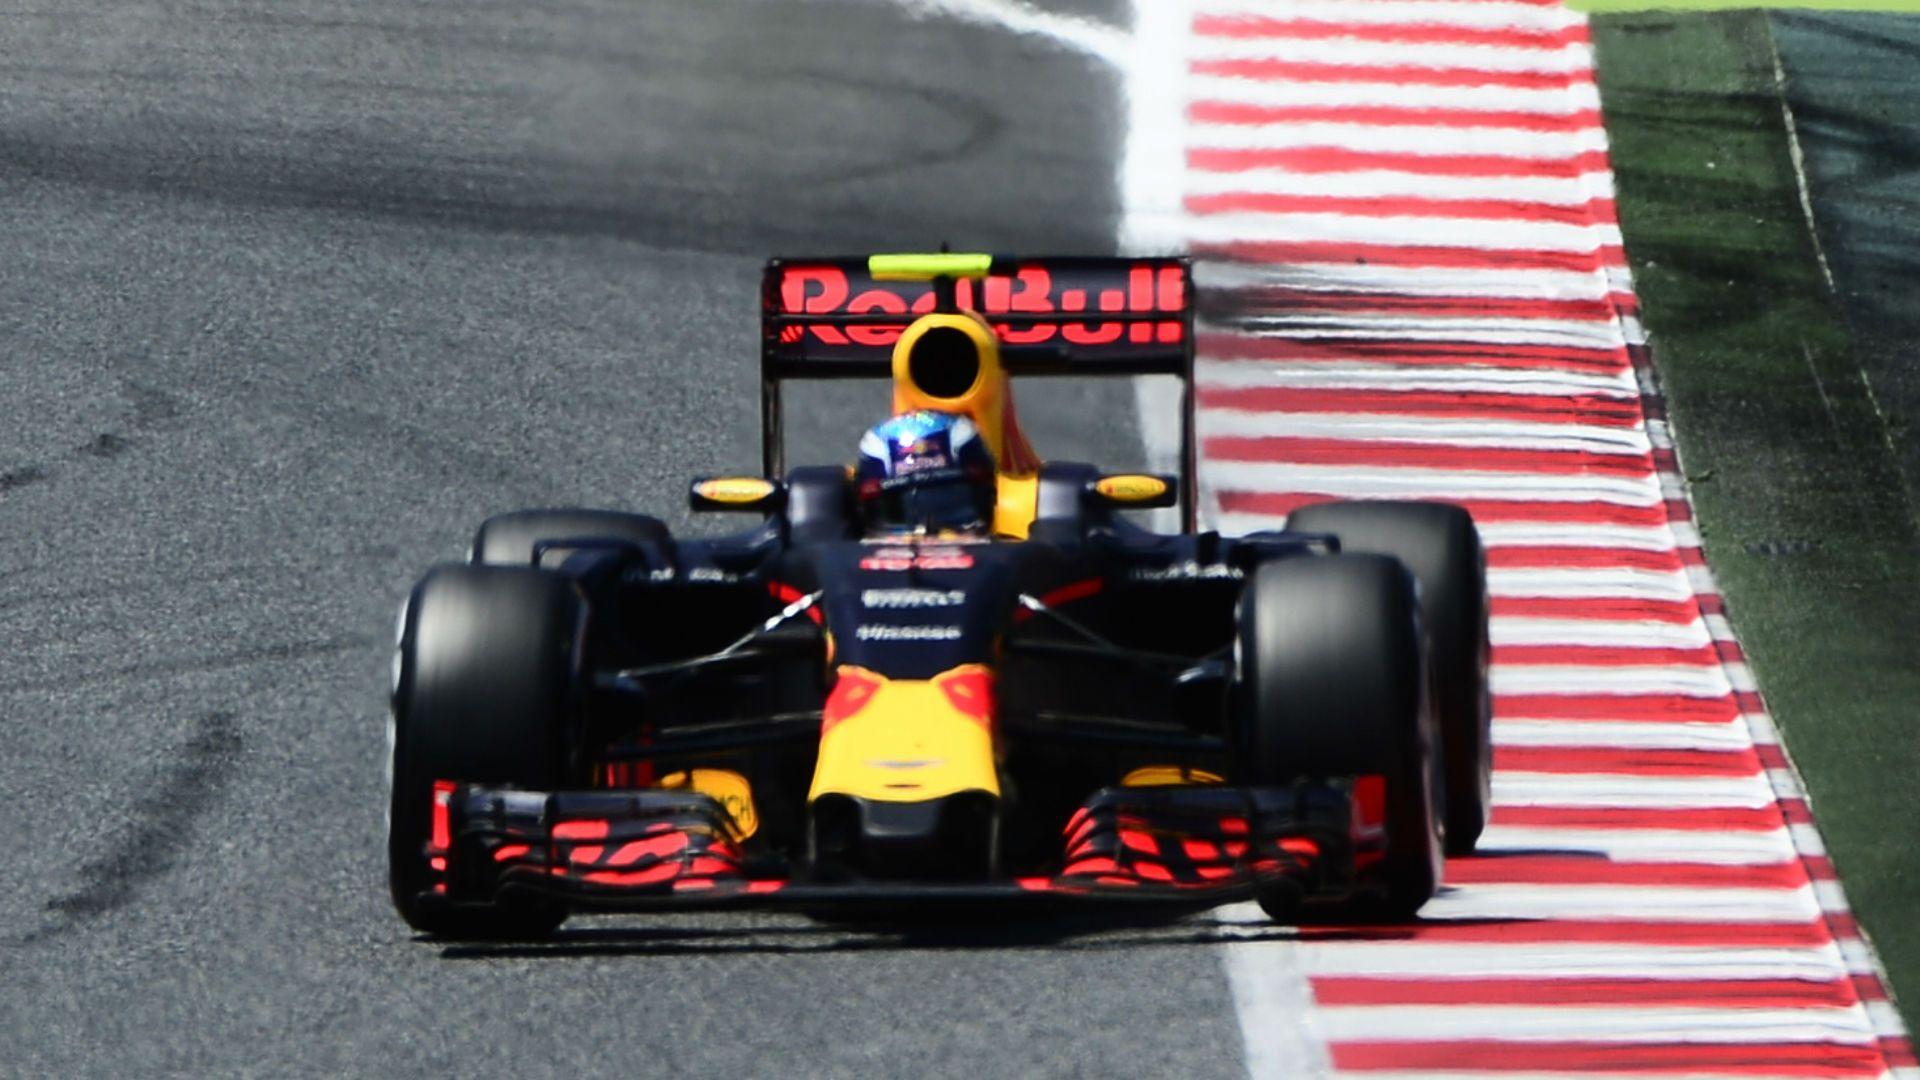 Motorsport. Stunning Max Verstappen drive wins dramatic Spanish